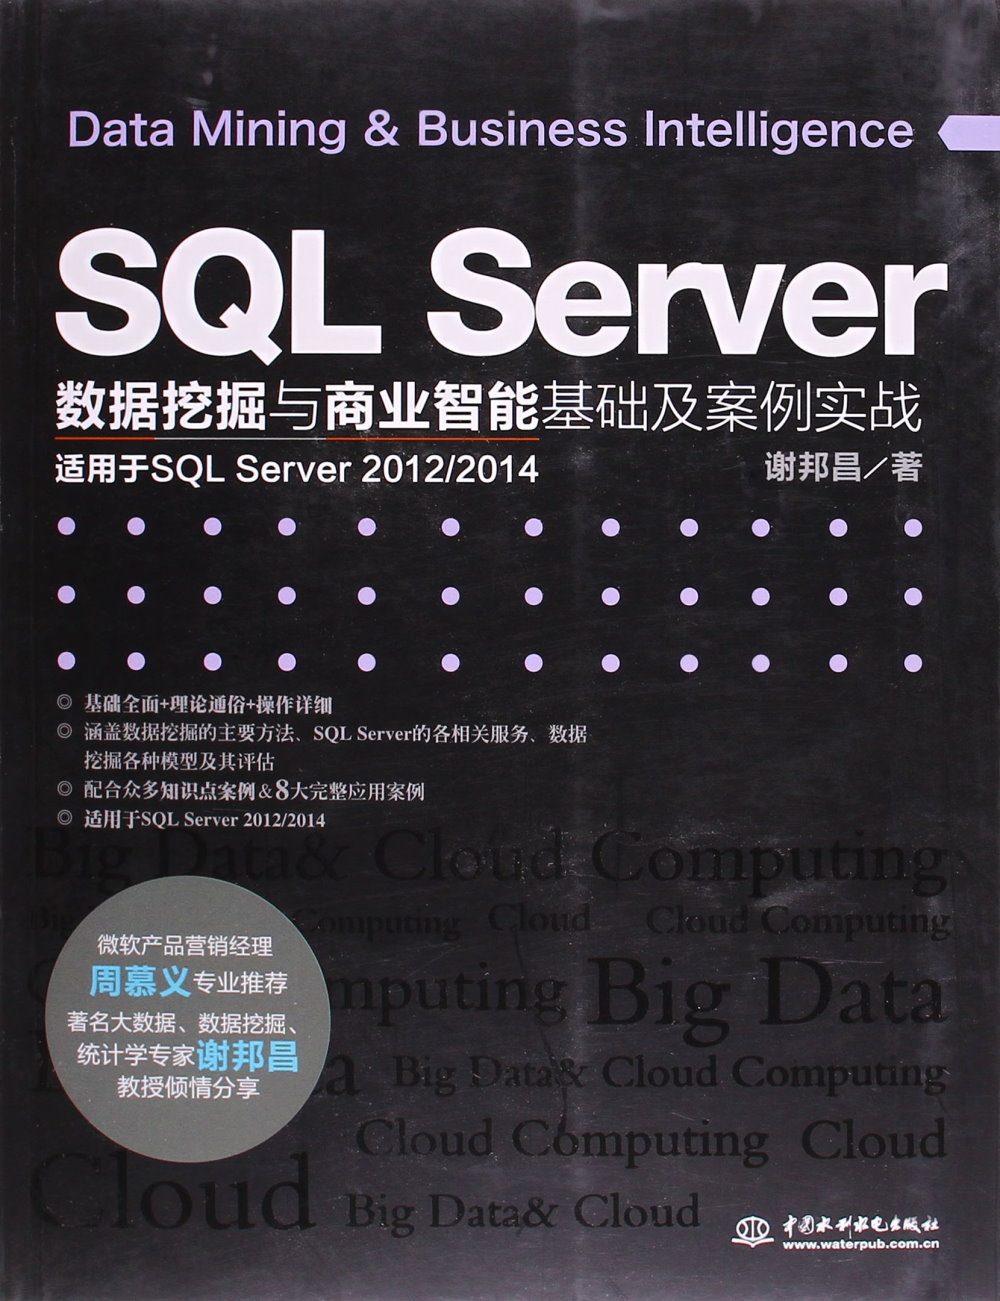 SQL Server數據挖掘與商業智能基礎及案例實戰